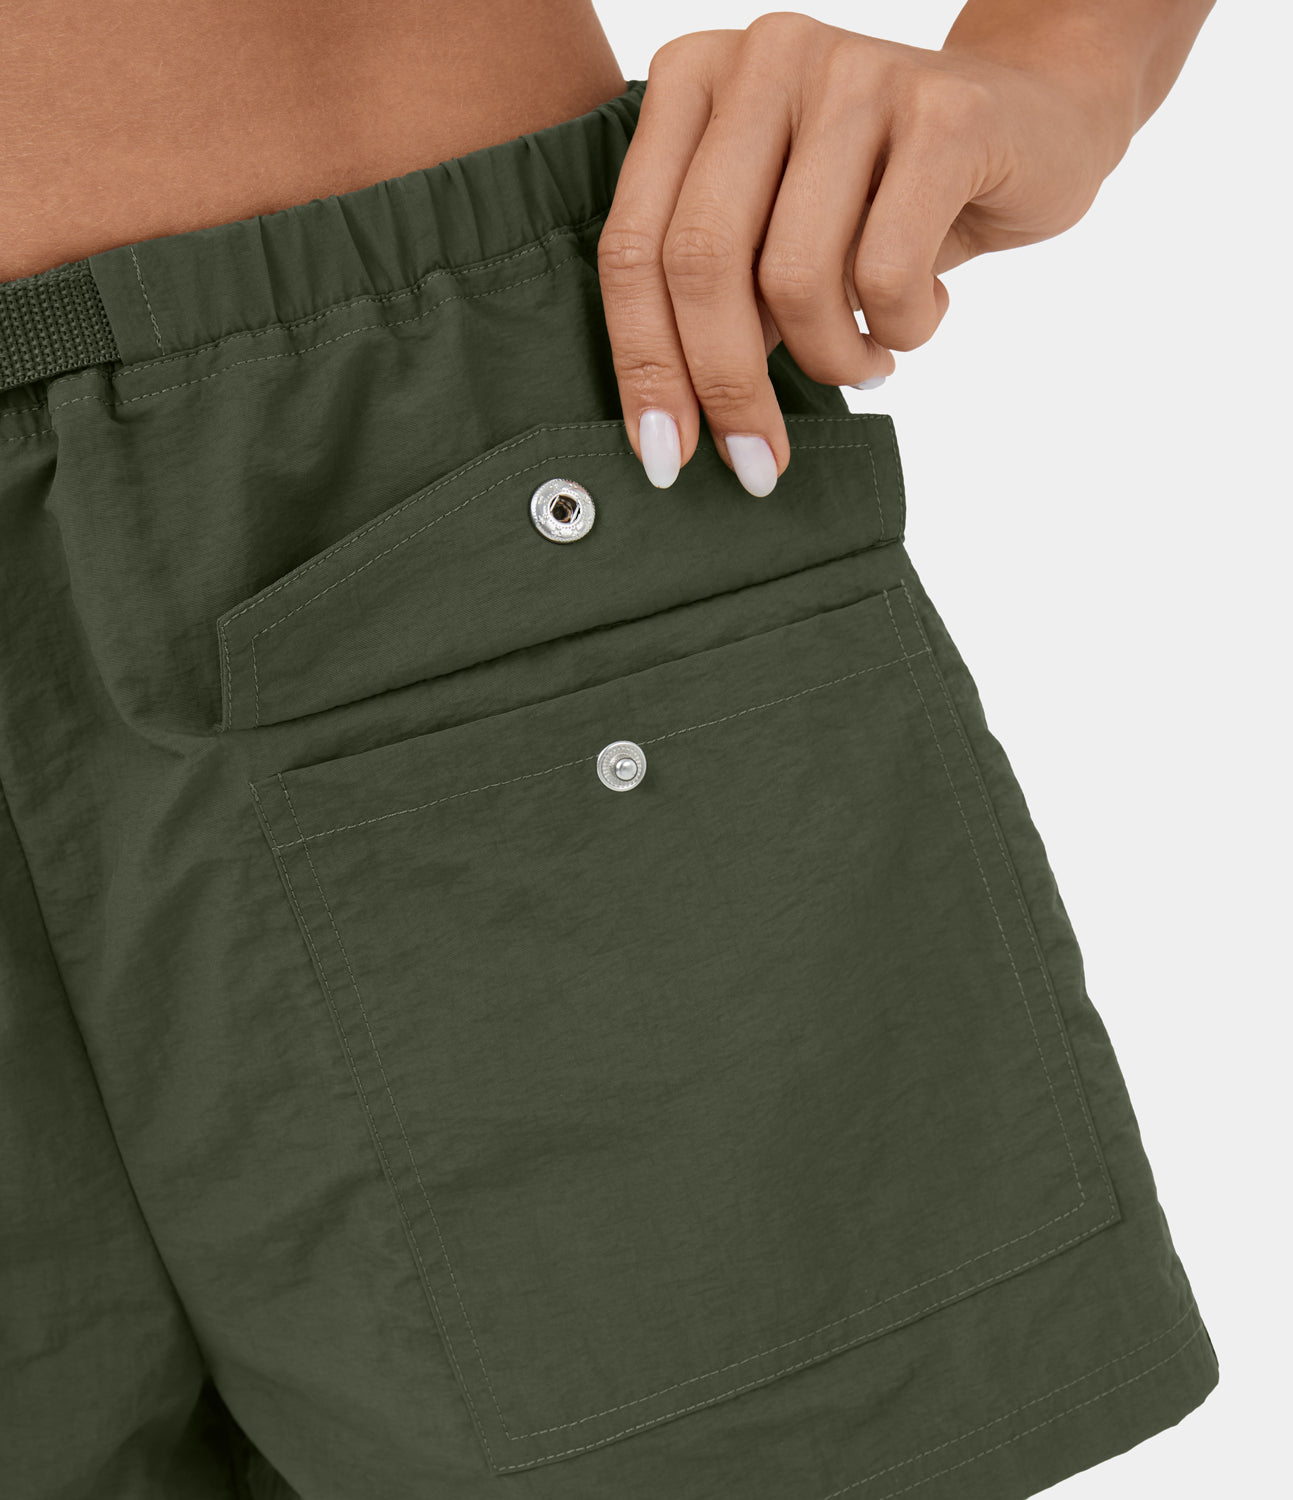 

Halara High Waisted Belted Side Flap Pocket Casual Cargo Shorts 3.5'' Gym Short - Deep Tea Green -  booty shorts compression shorts